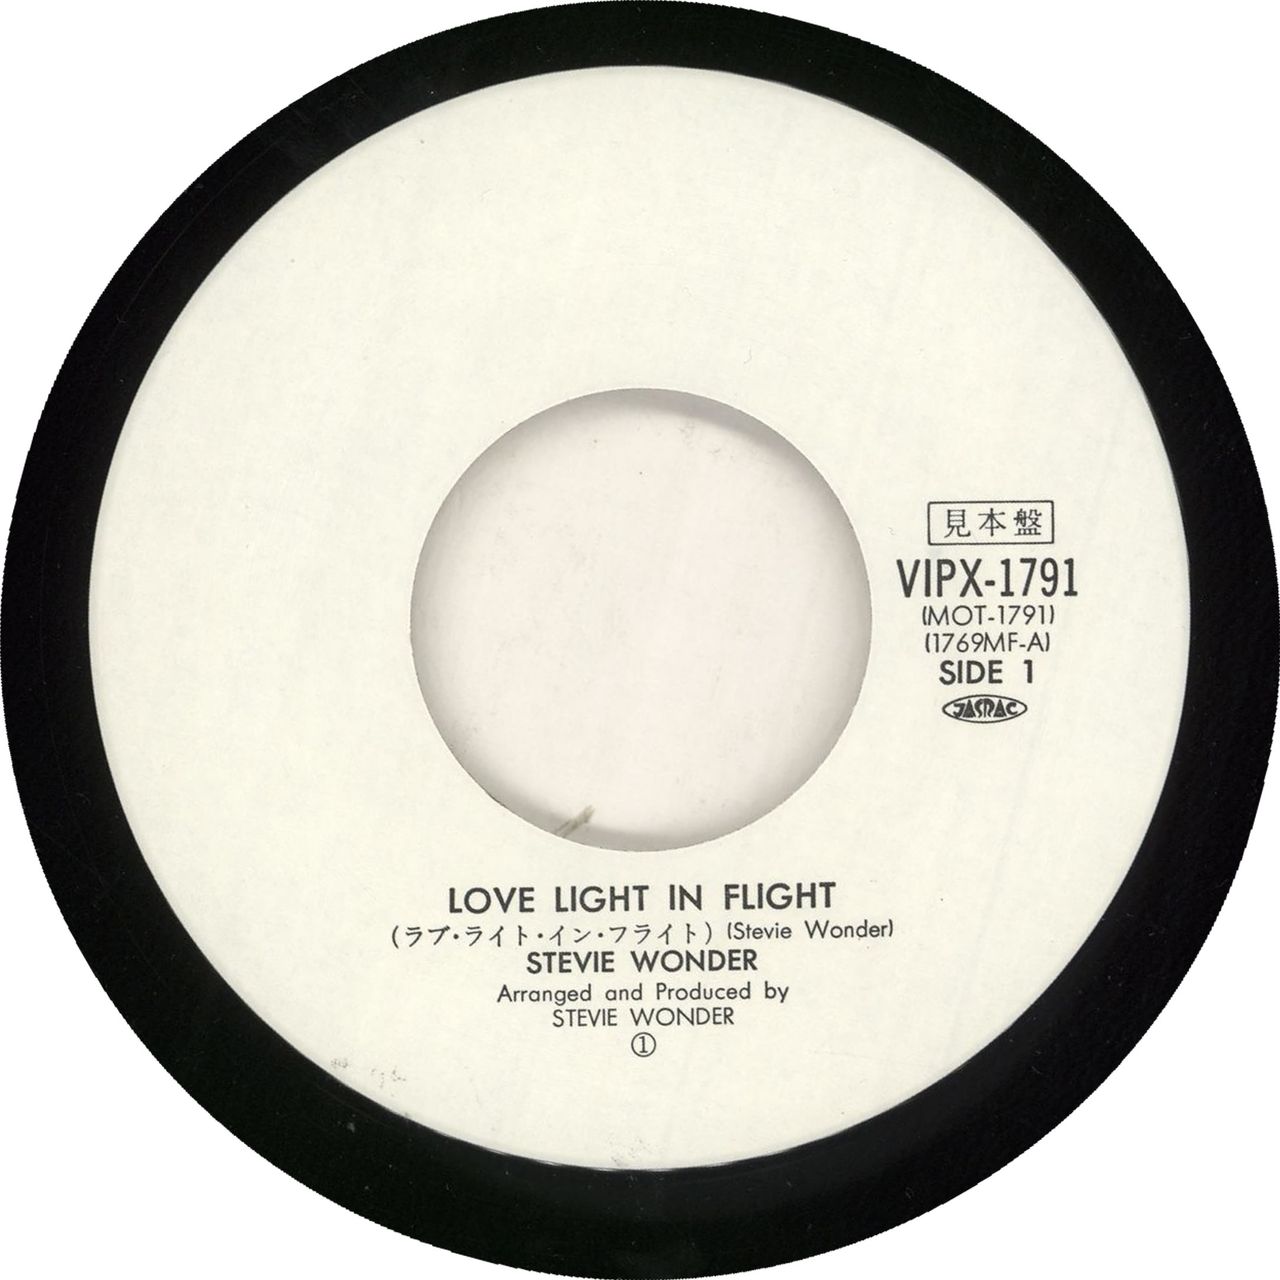 Milepæl midt i intetsteds Hovedkvarter Stevie Wonder Love Light In Flight Japanese Promo 7" vinyl — RareVinyl.com